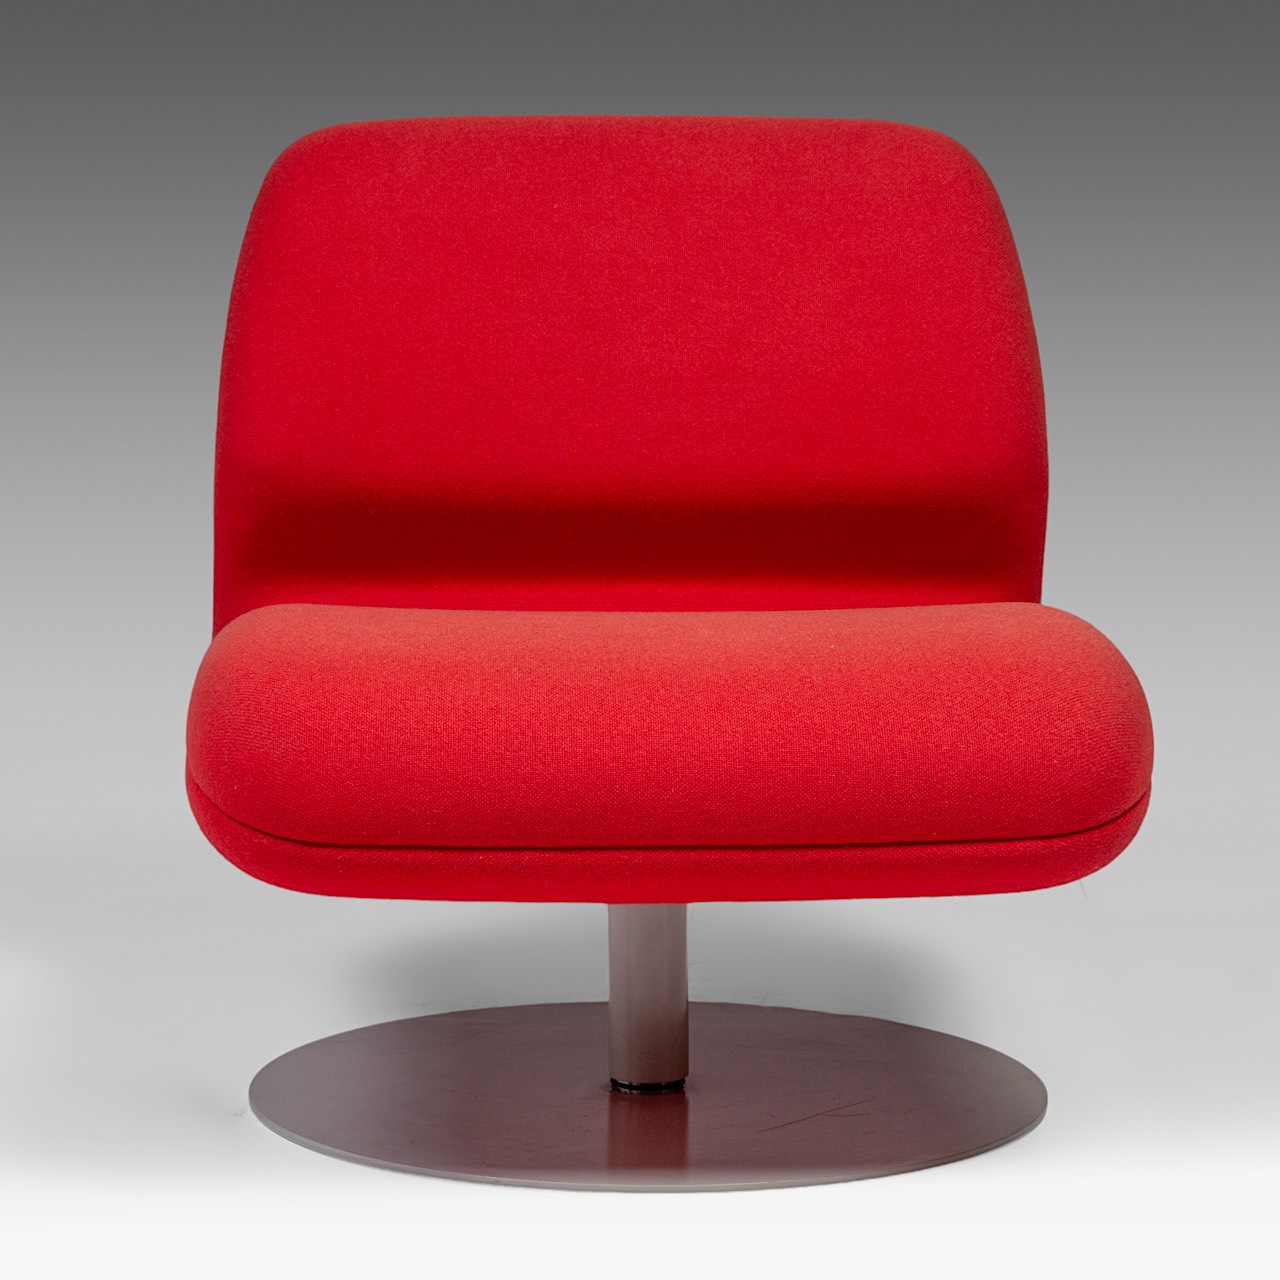 An 'Attitude' chair by Morten Voss for Fritz Hansen, Danmark, 2005, H 70 - W 65 cm - Image 6 of 10